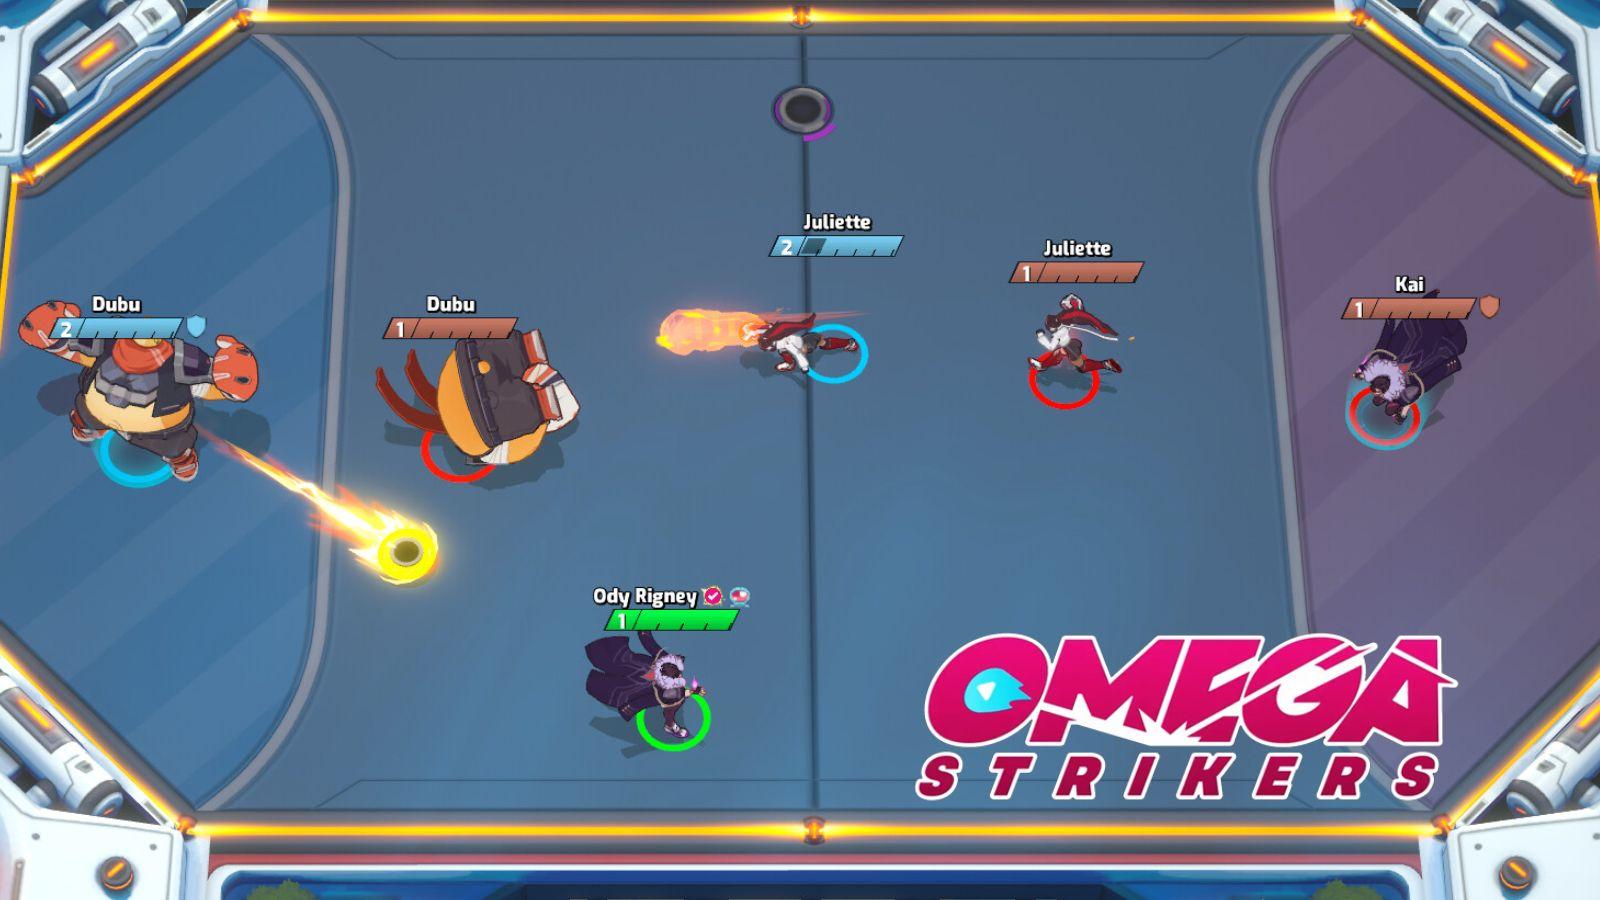 Omega strikers match